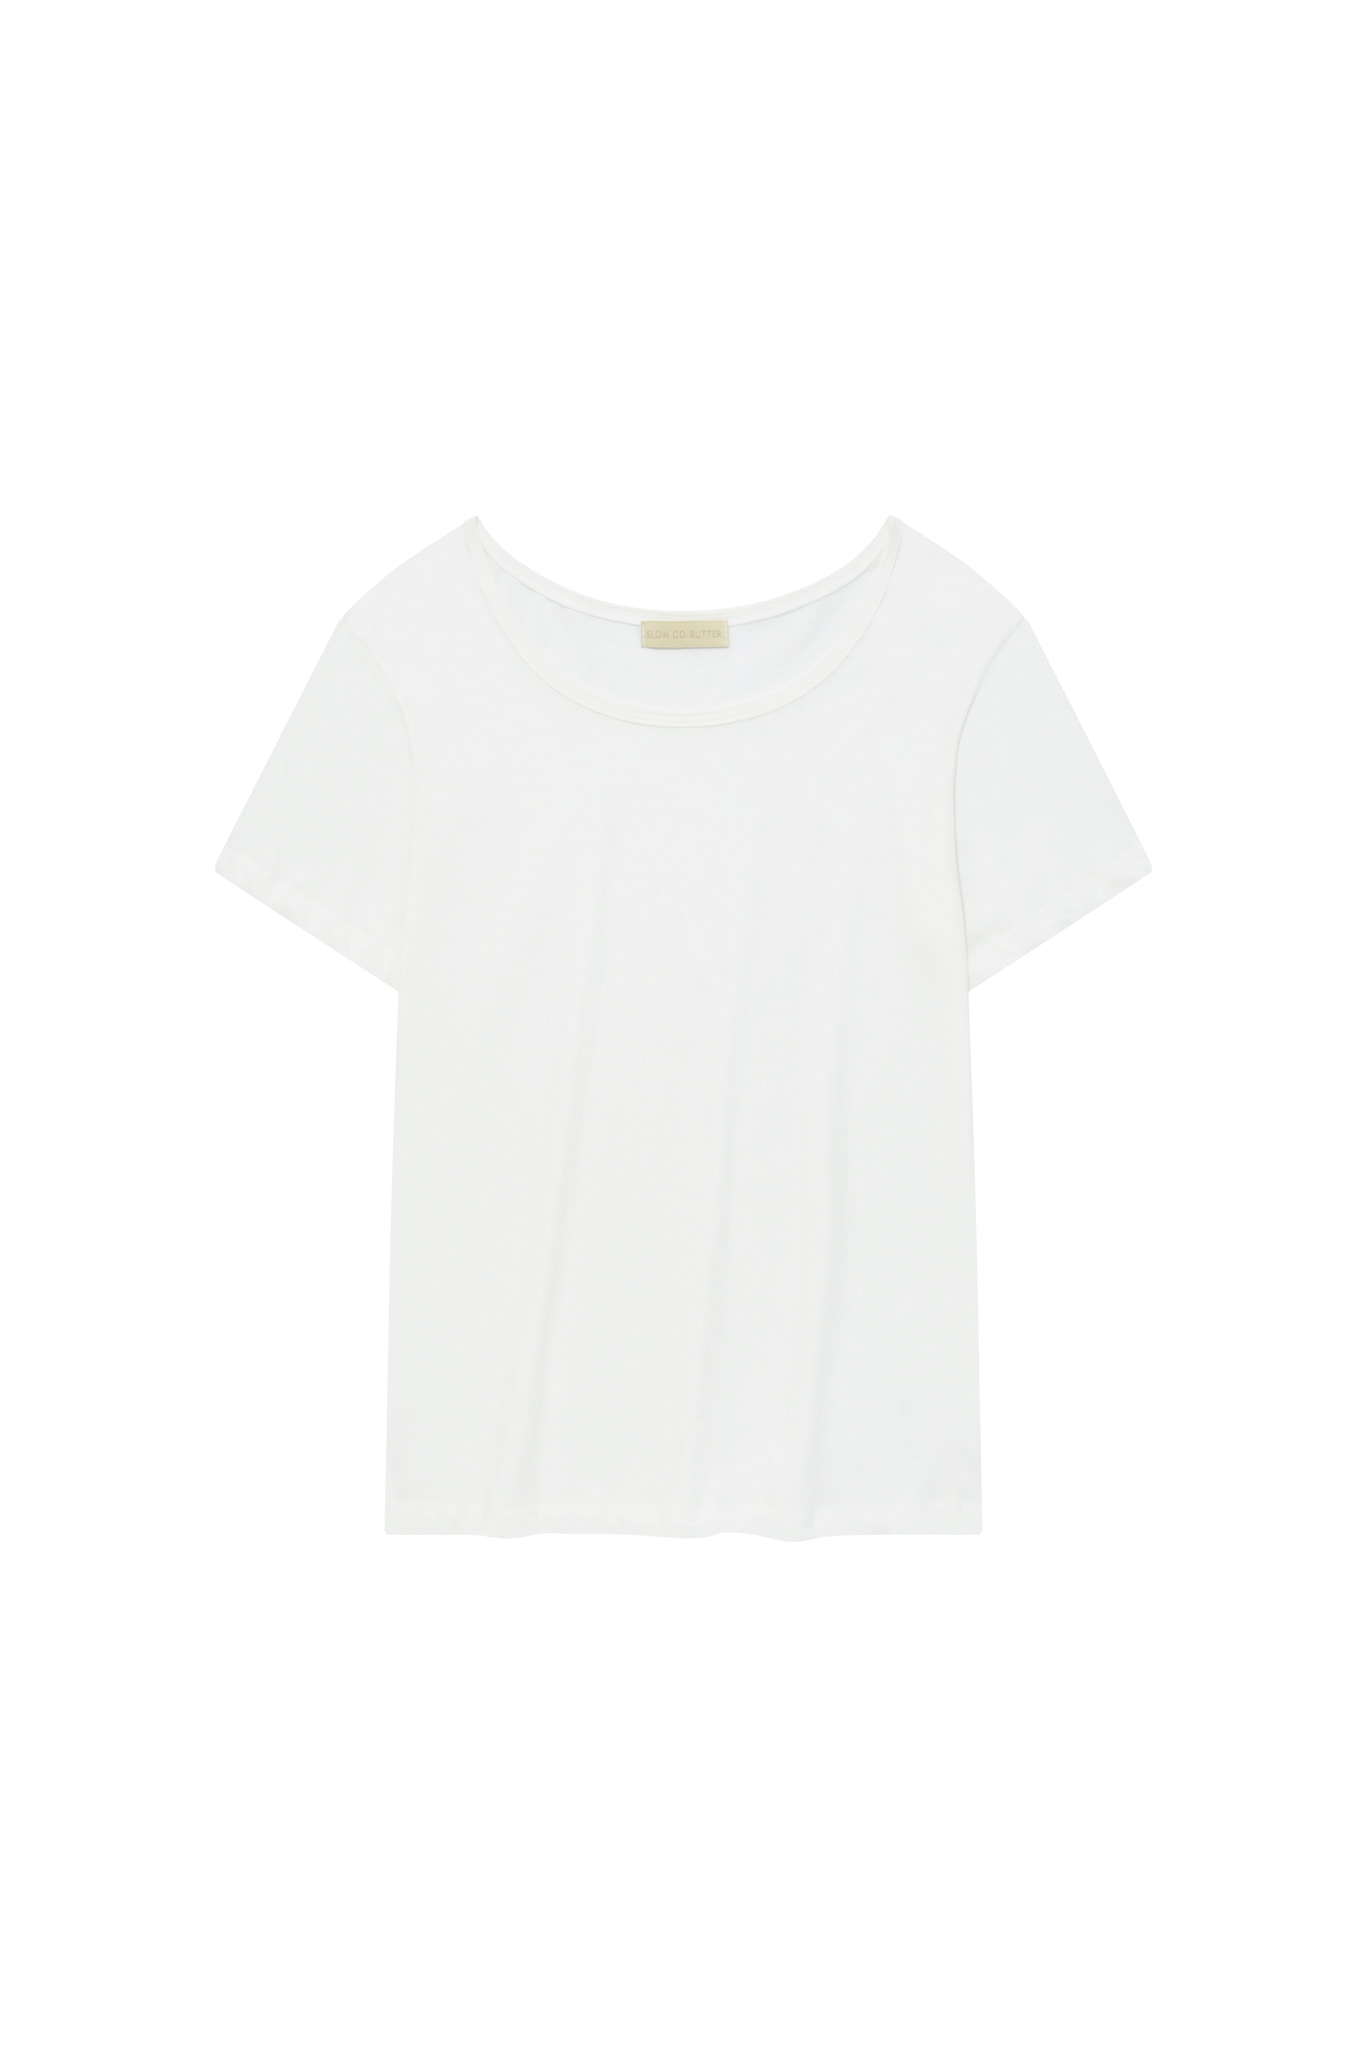 [SLOCO] Soft u neck tshirt, white